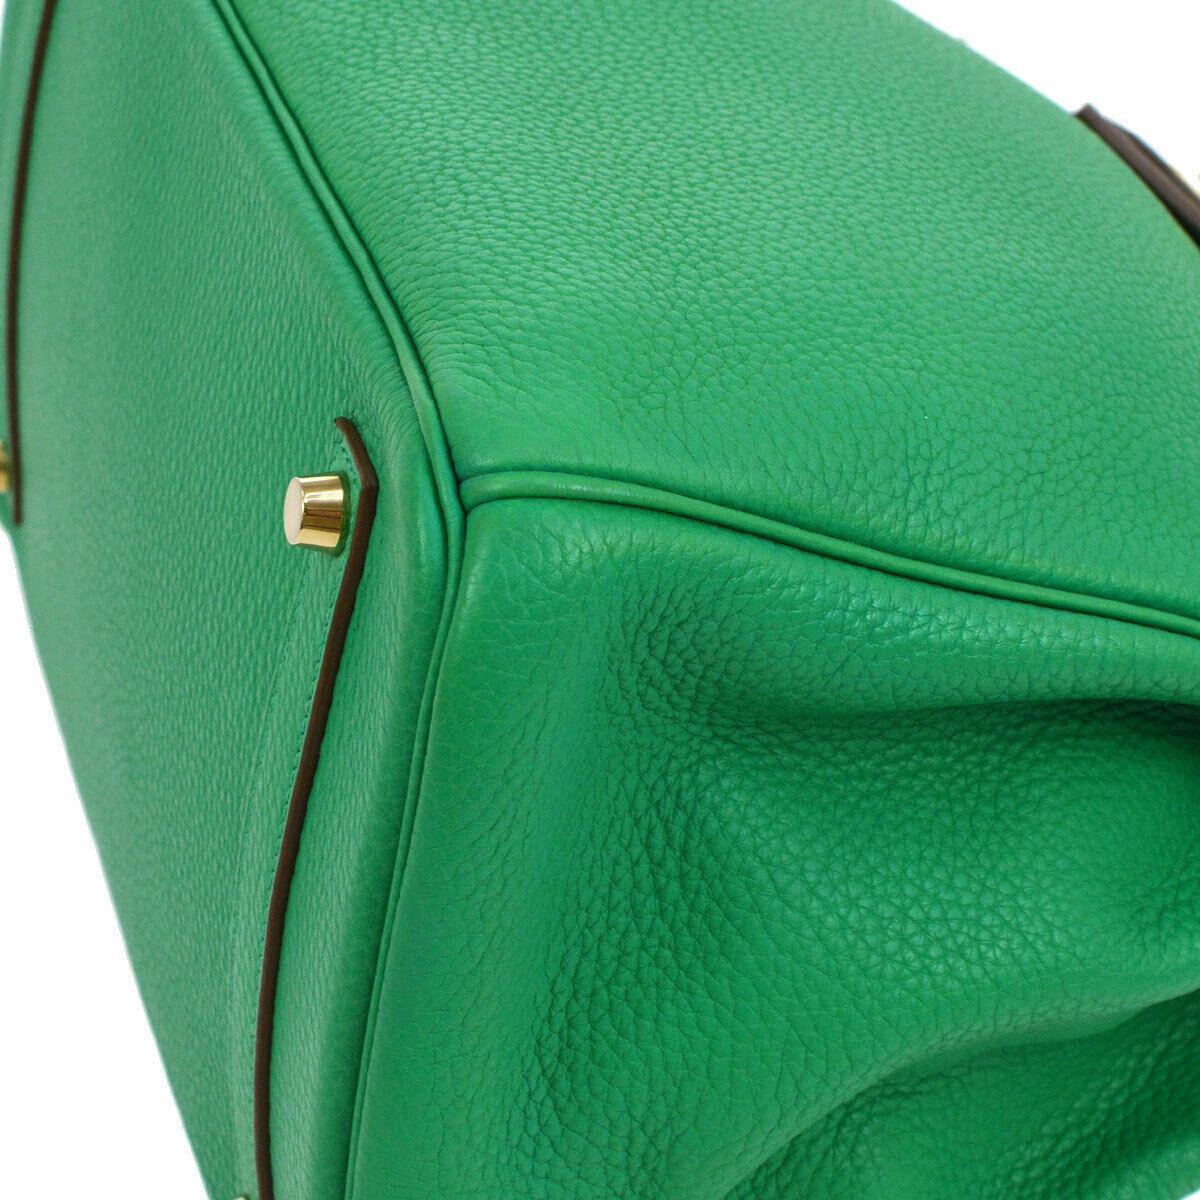 Hermes Birkin 35 Apple Green Leather Gold Carryall Top Handle Satchel Tote 2